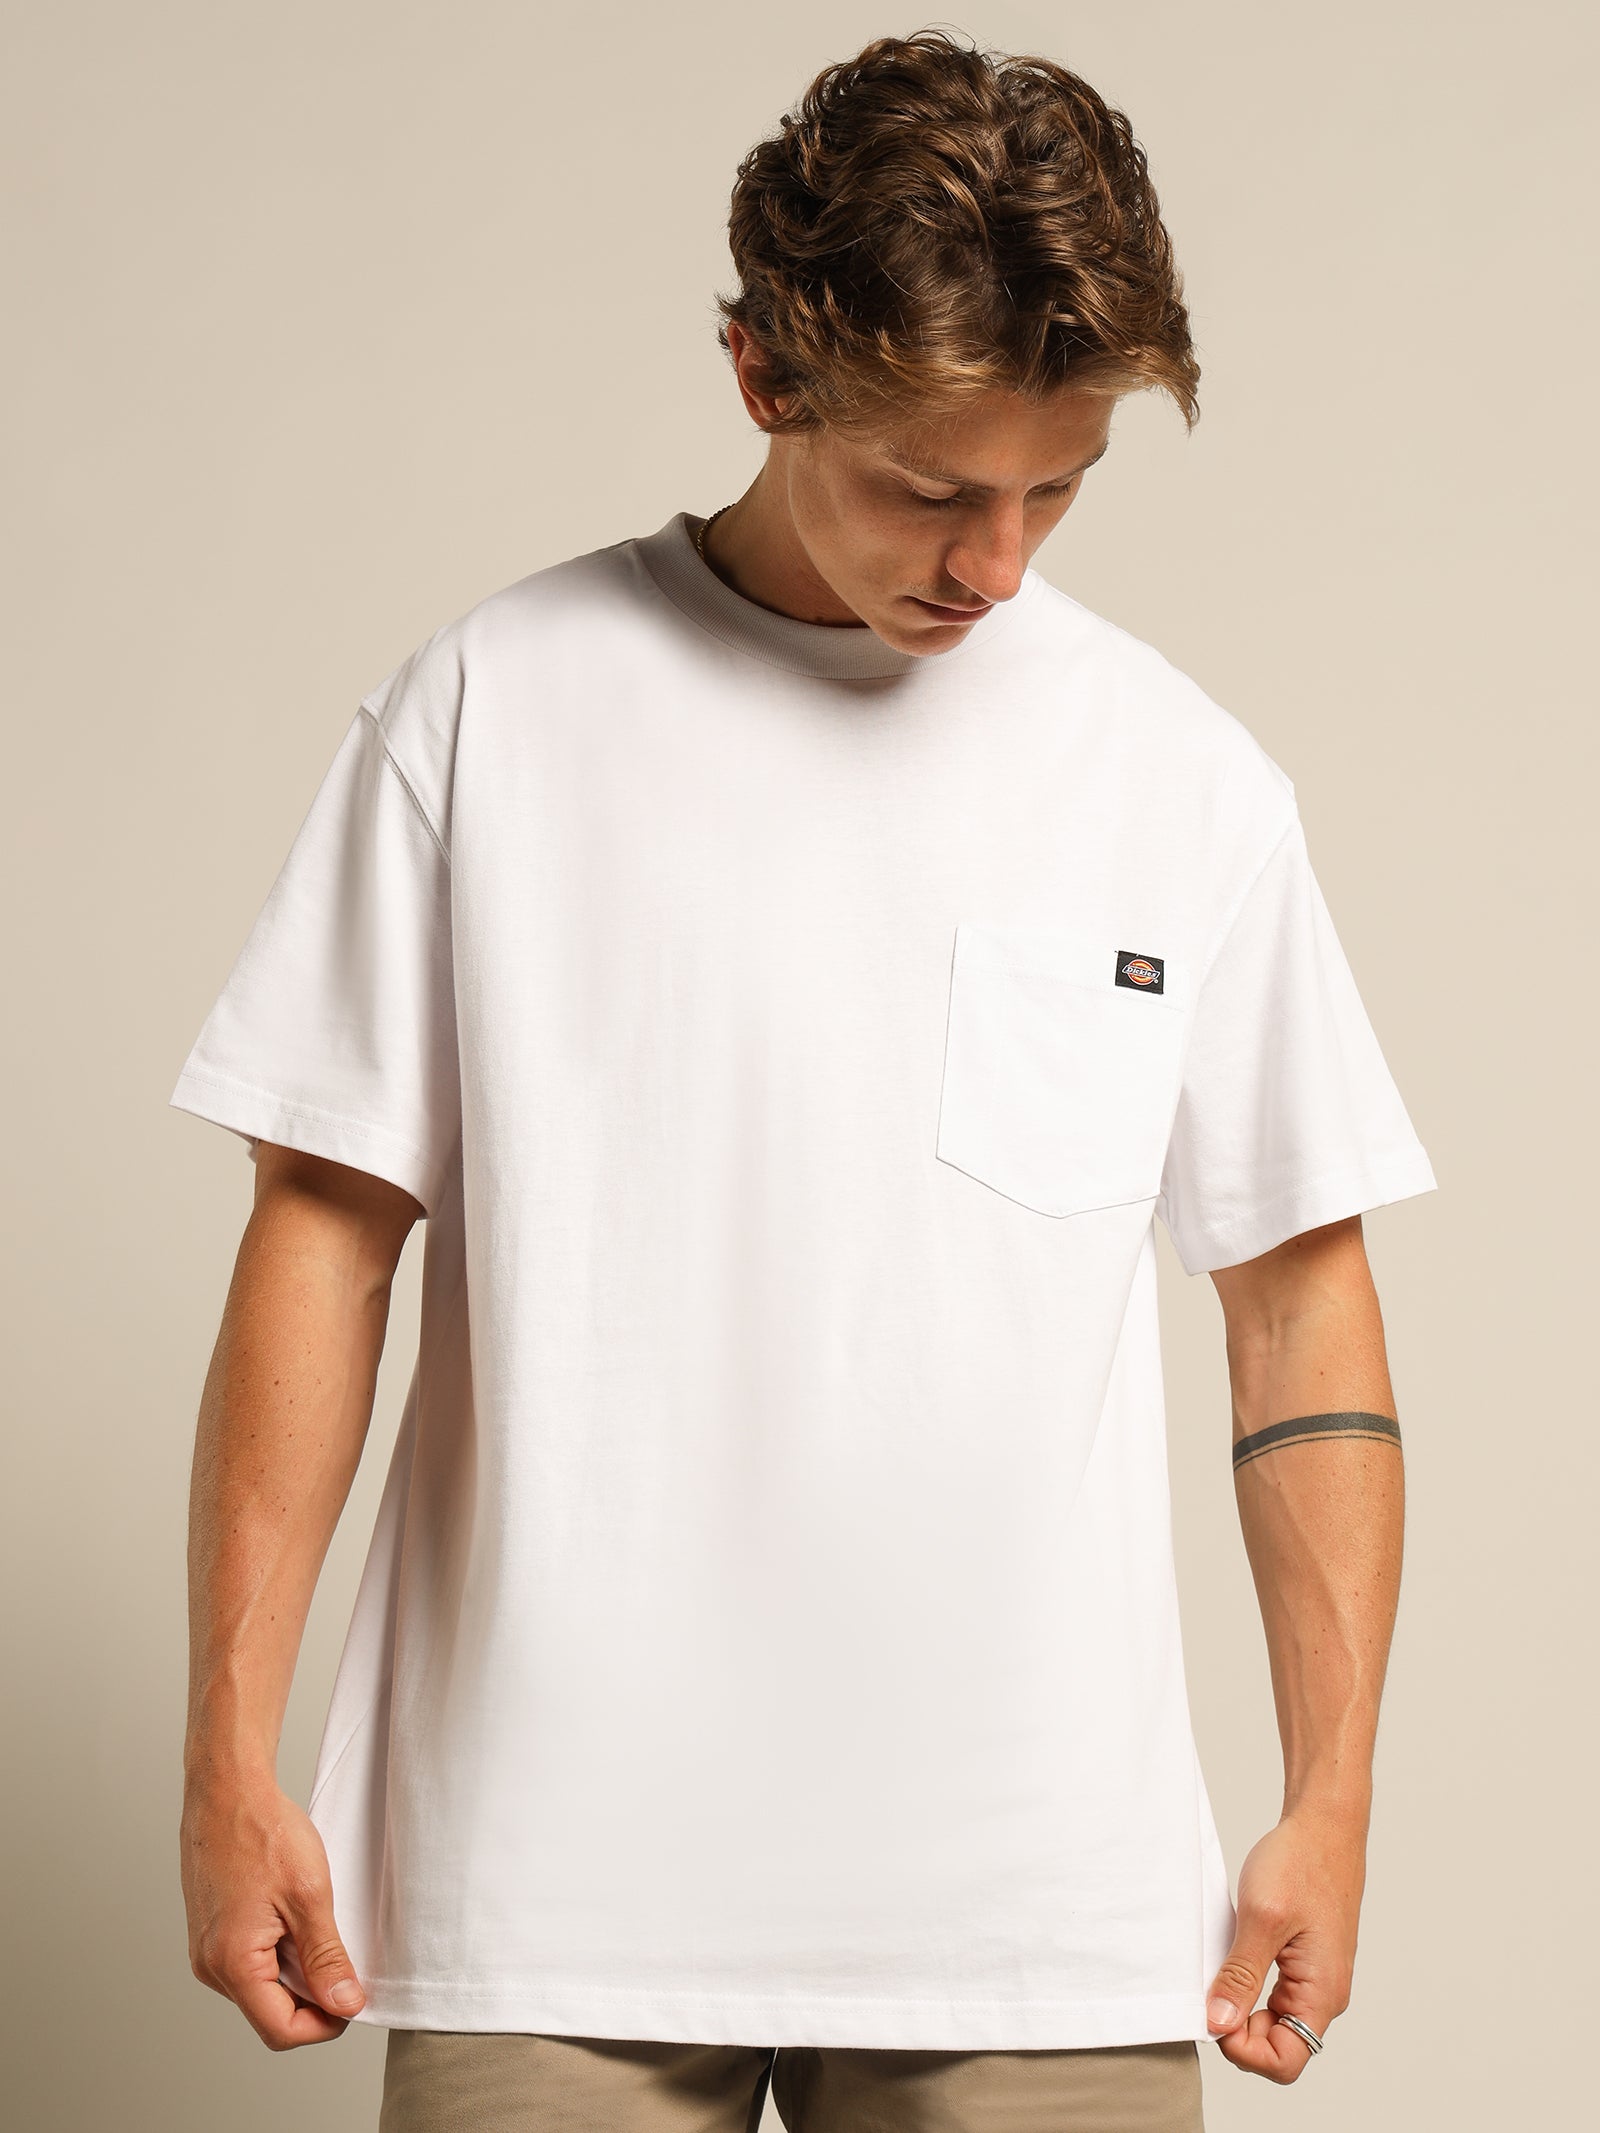 WS450 Heavyweight T-Shirt in White - Glue Store